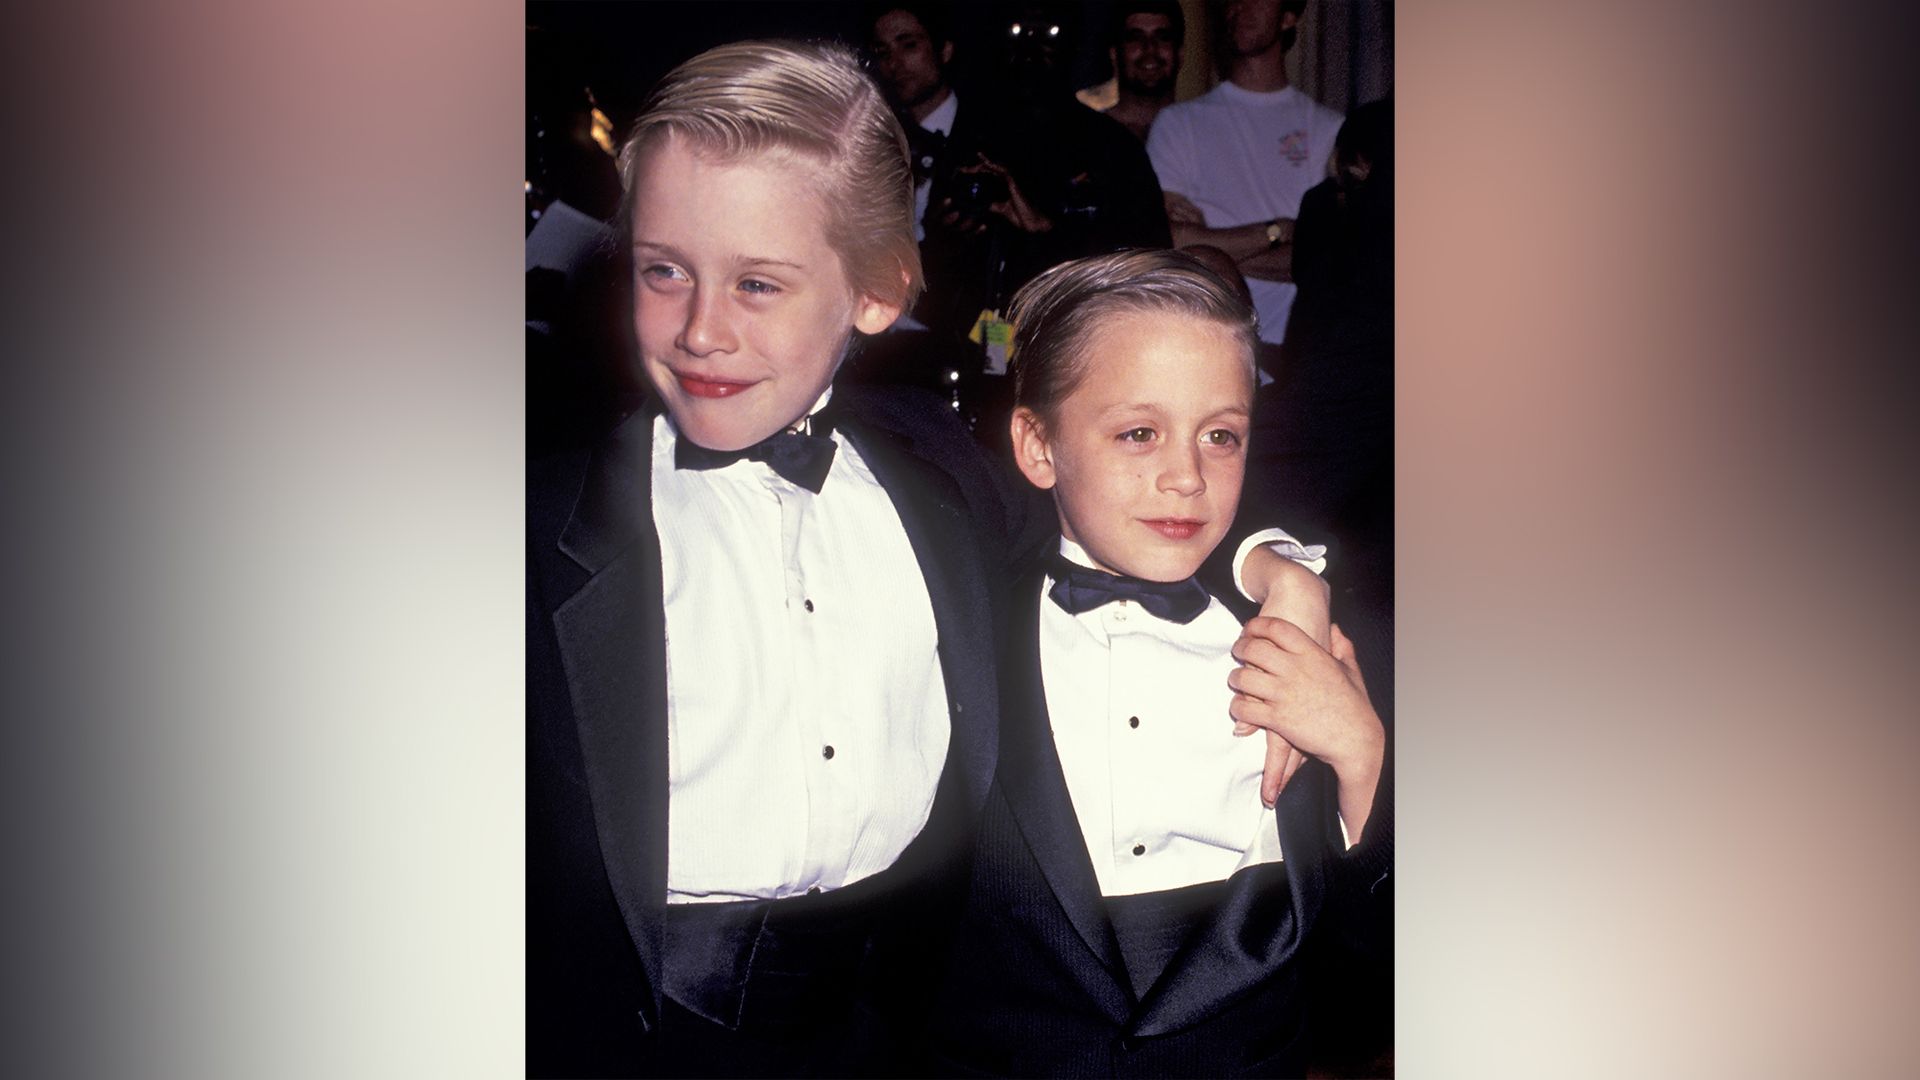 Macaulay Culkin and his younger brother Kieran Culkin